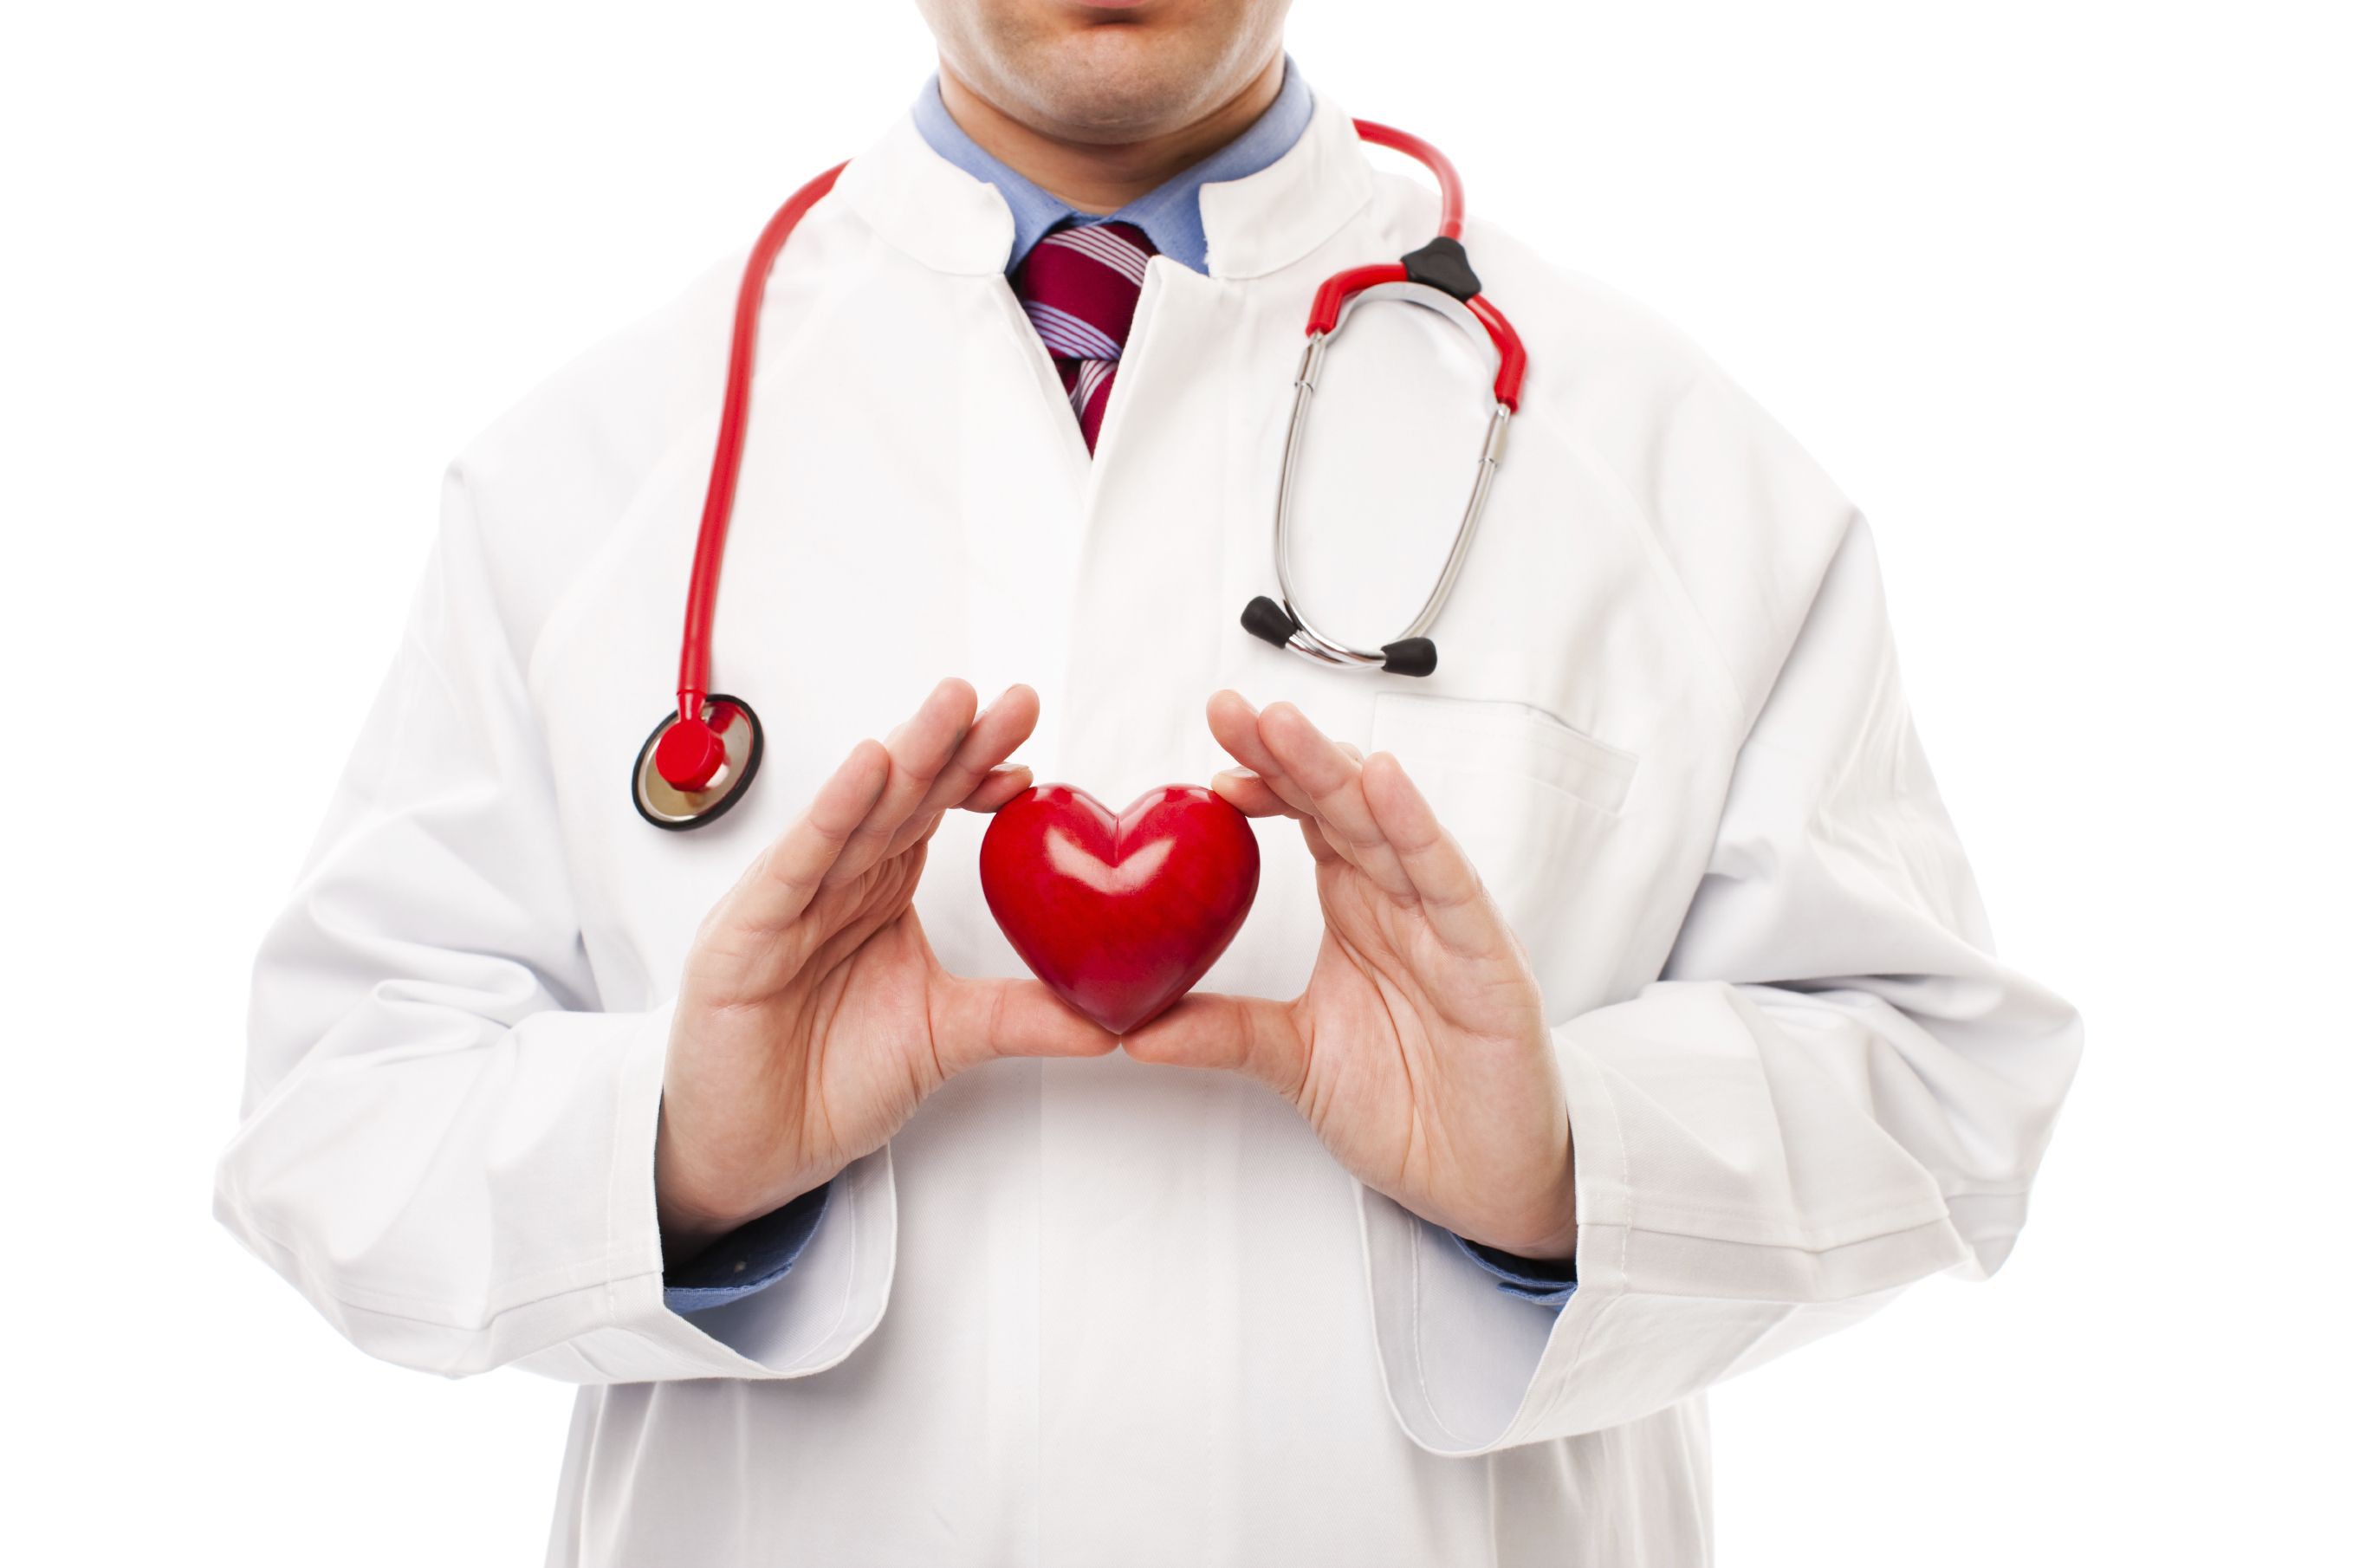 Центр здоровья сердца. Сердце в руках врача. Врач с сердечком. Доктор сердце. Сердце кардиолог.